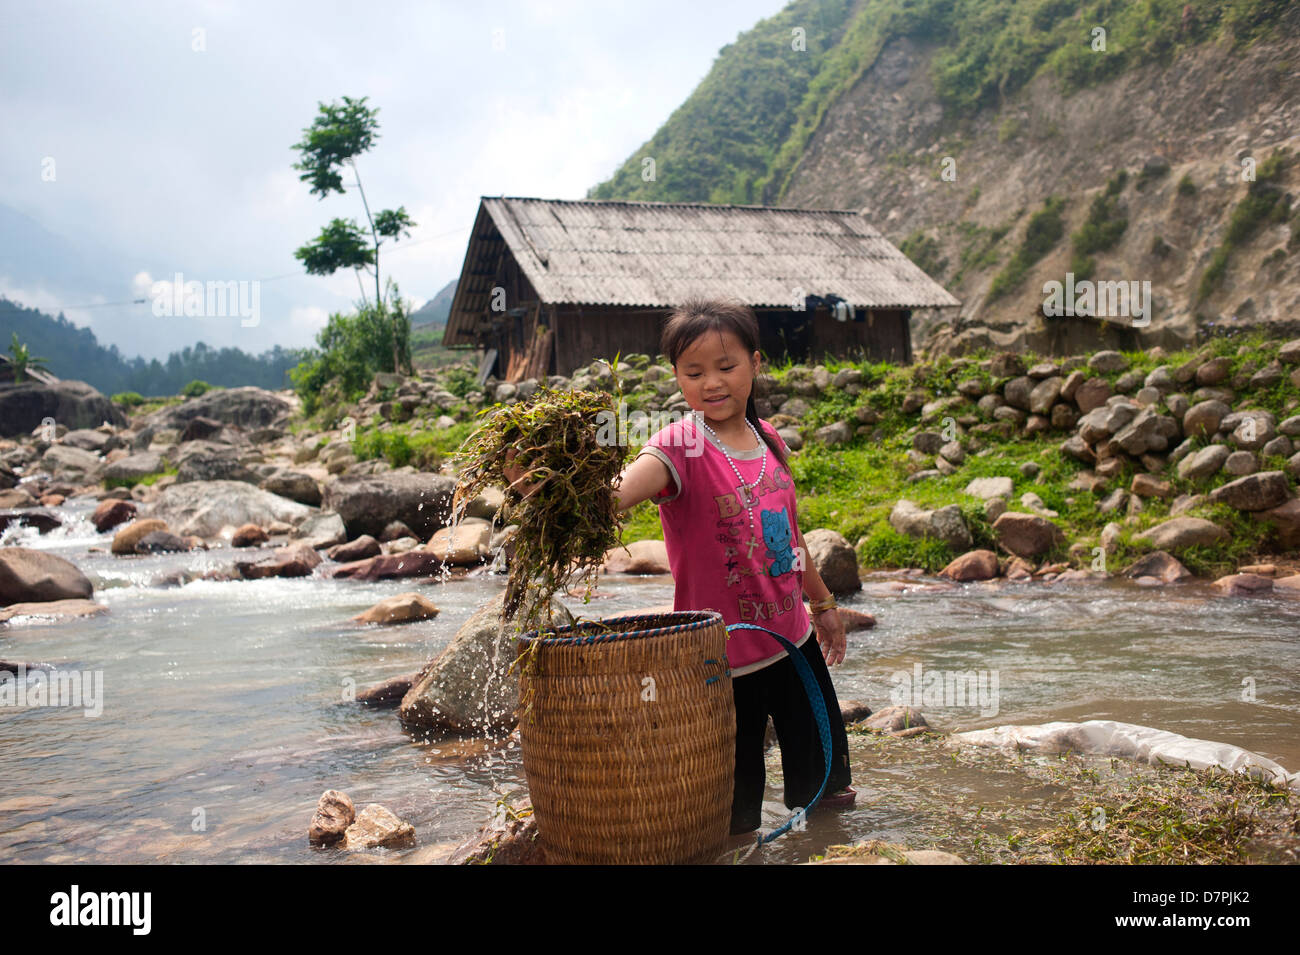 Sapa region, North East Vietnam  - Girl putting crops in a basket. Stock Photo